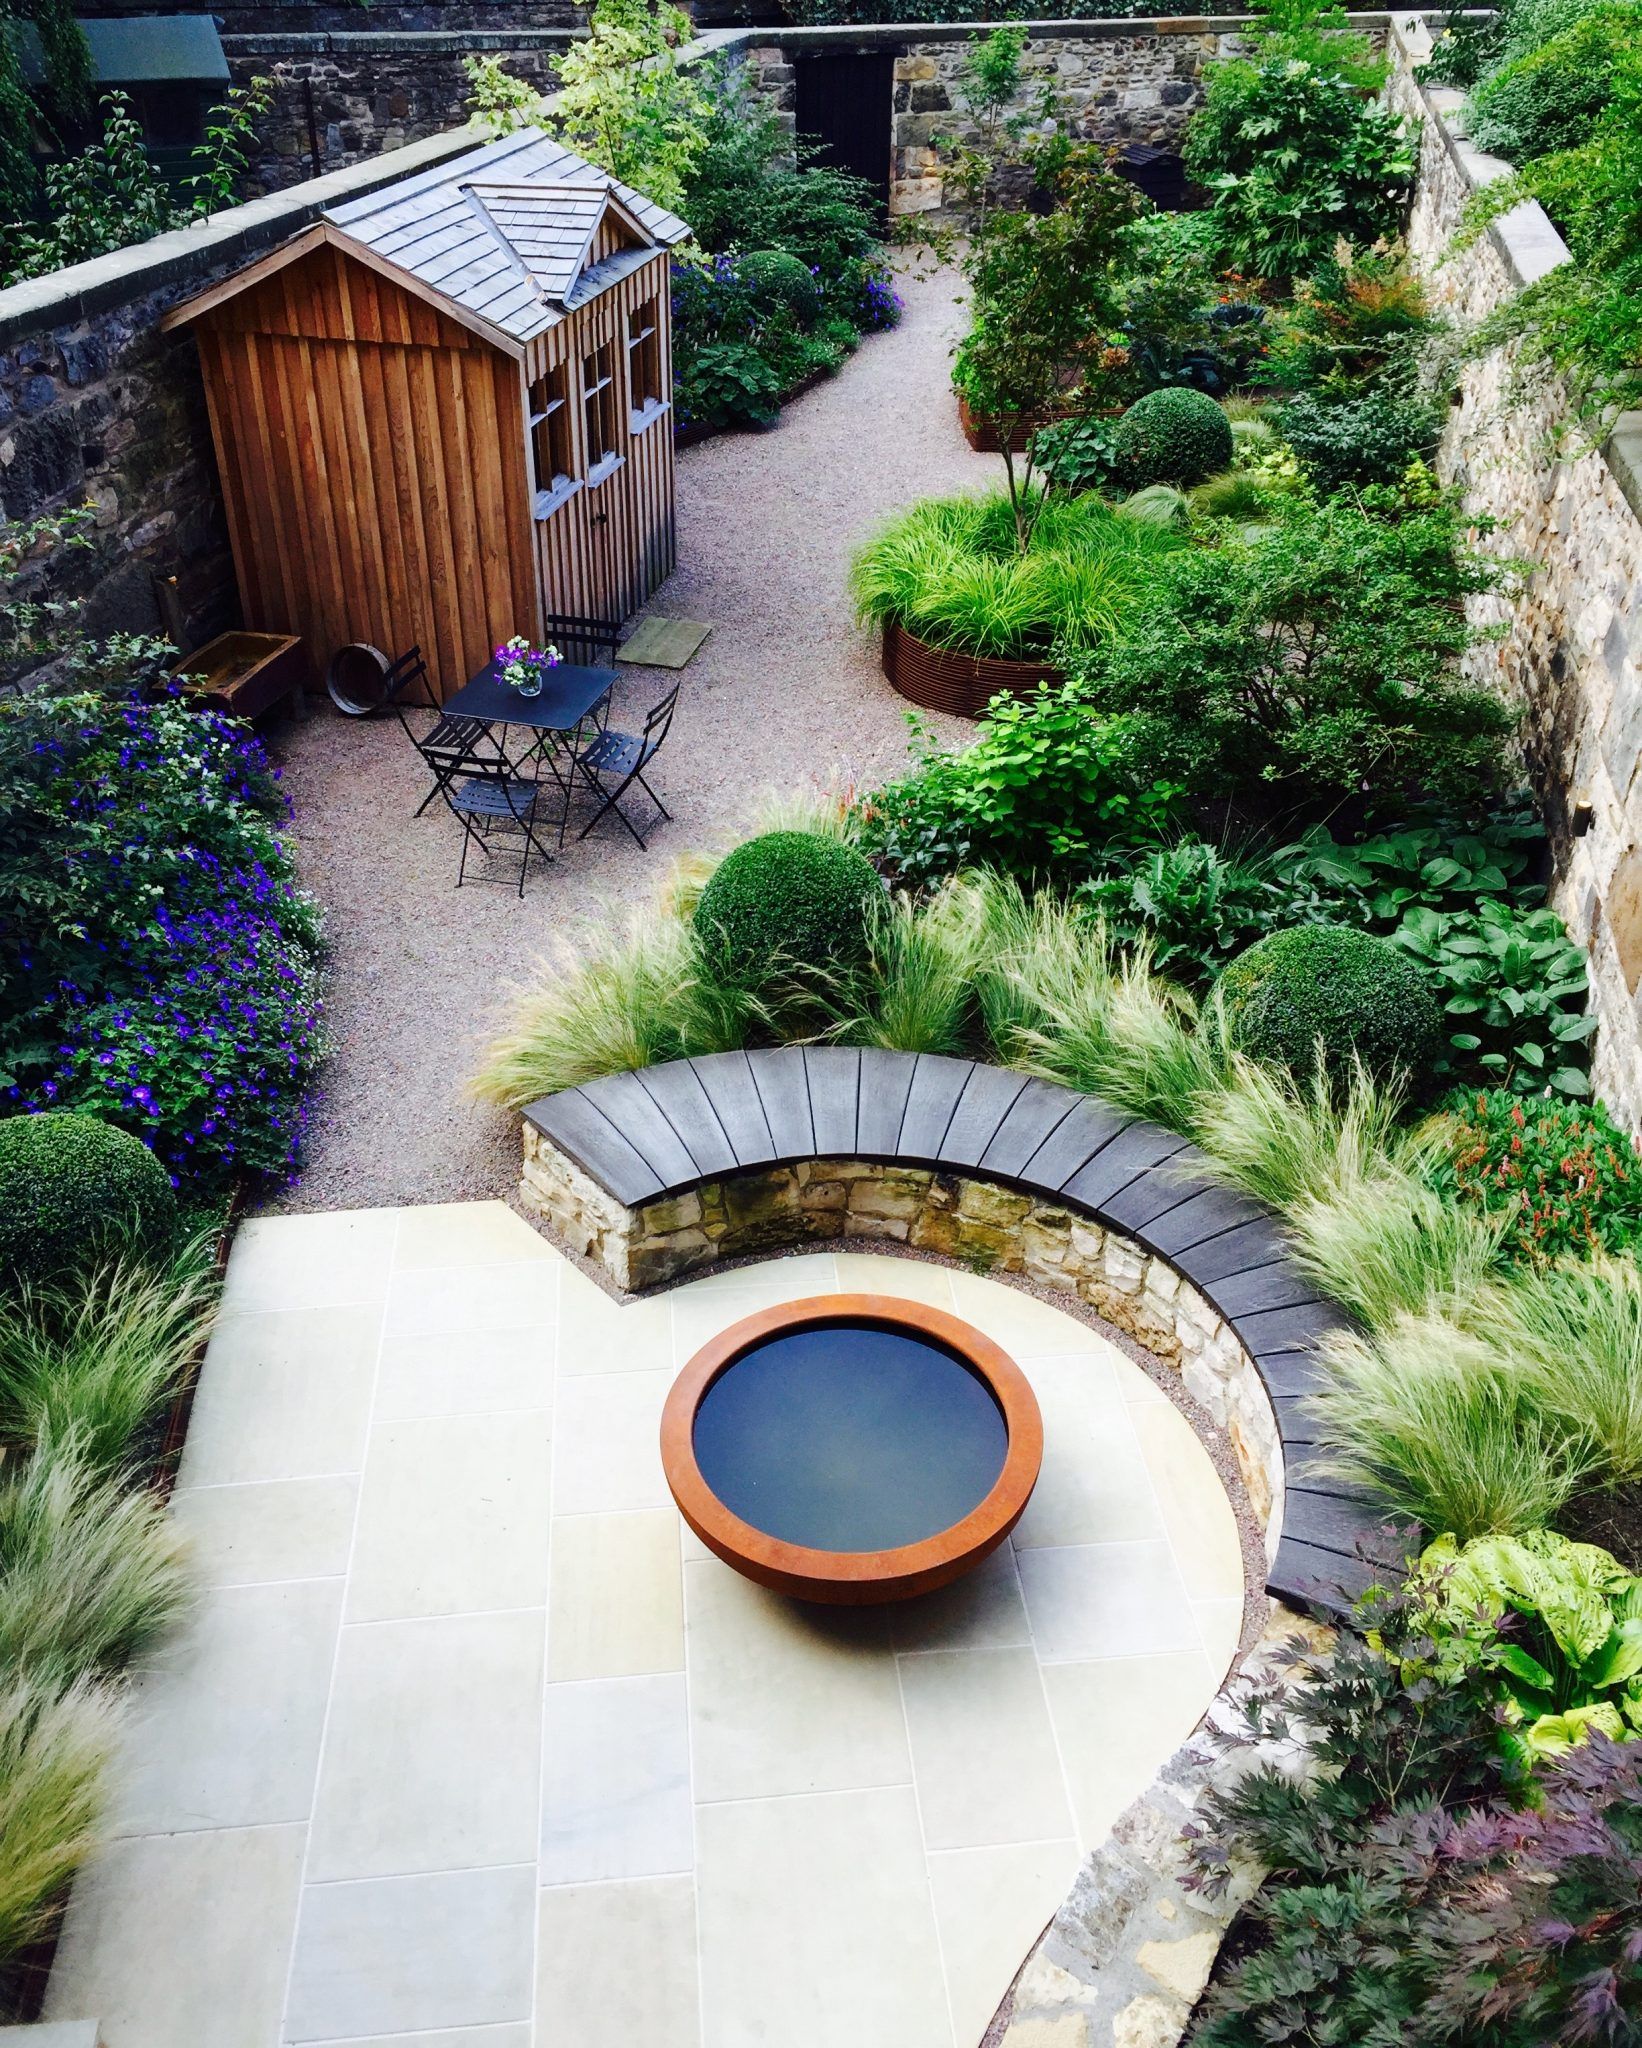 Create Your Own Oasis: Stunning Terrace
Garden Ideas